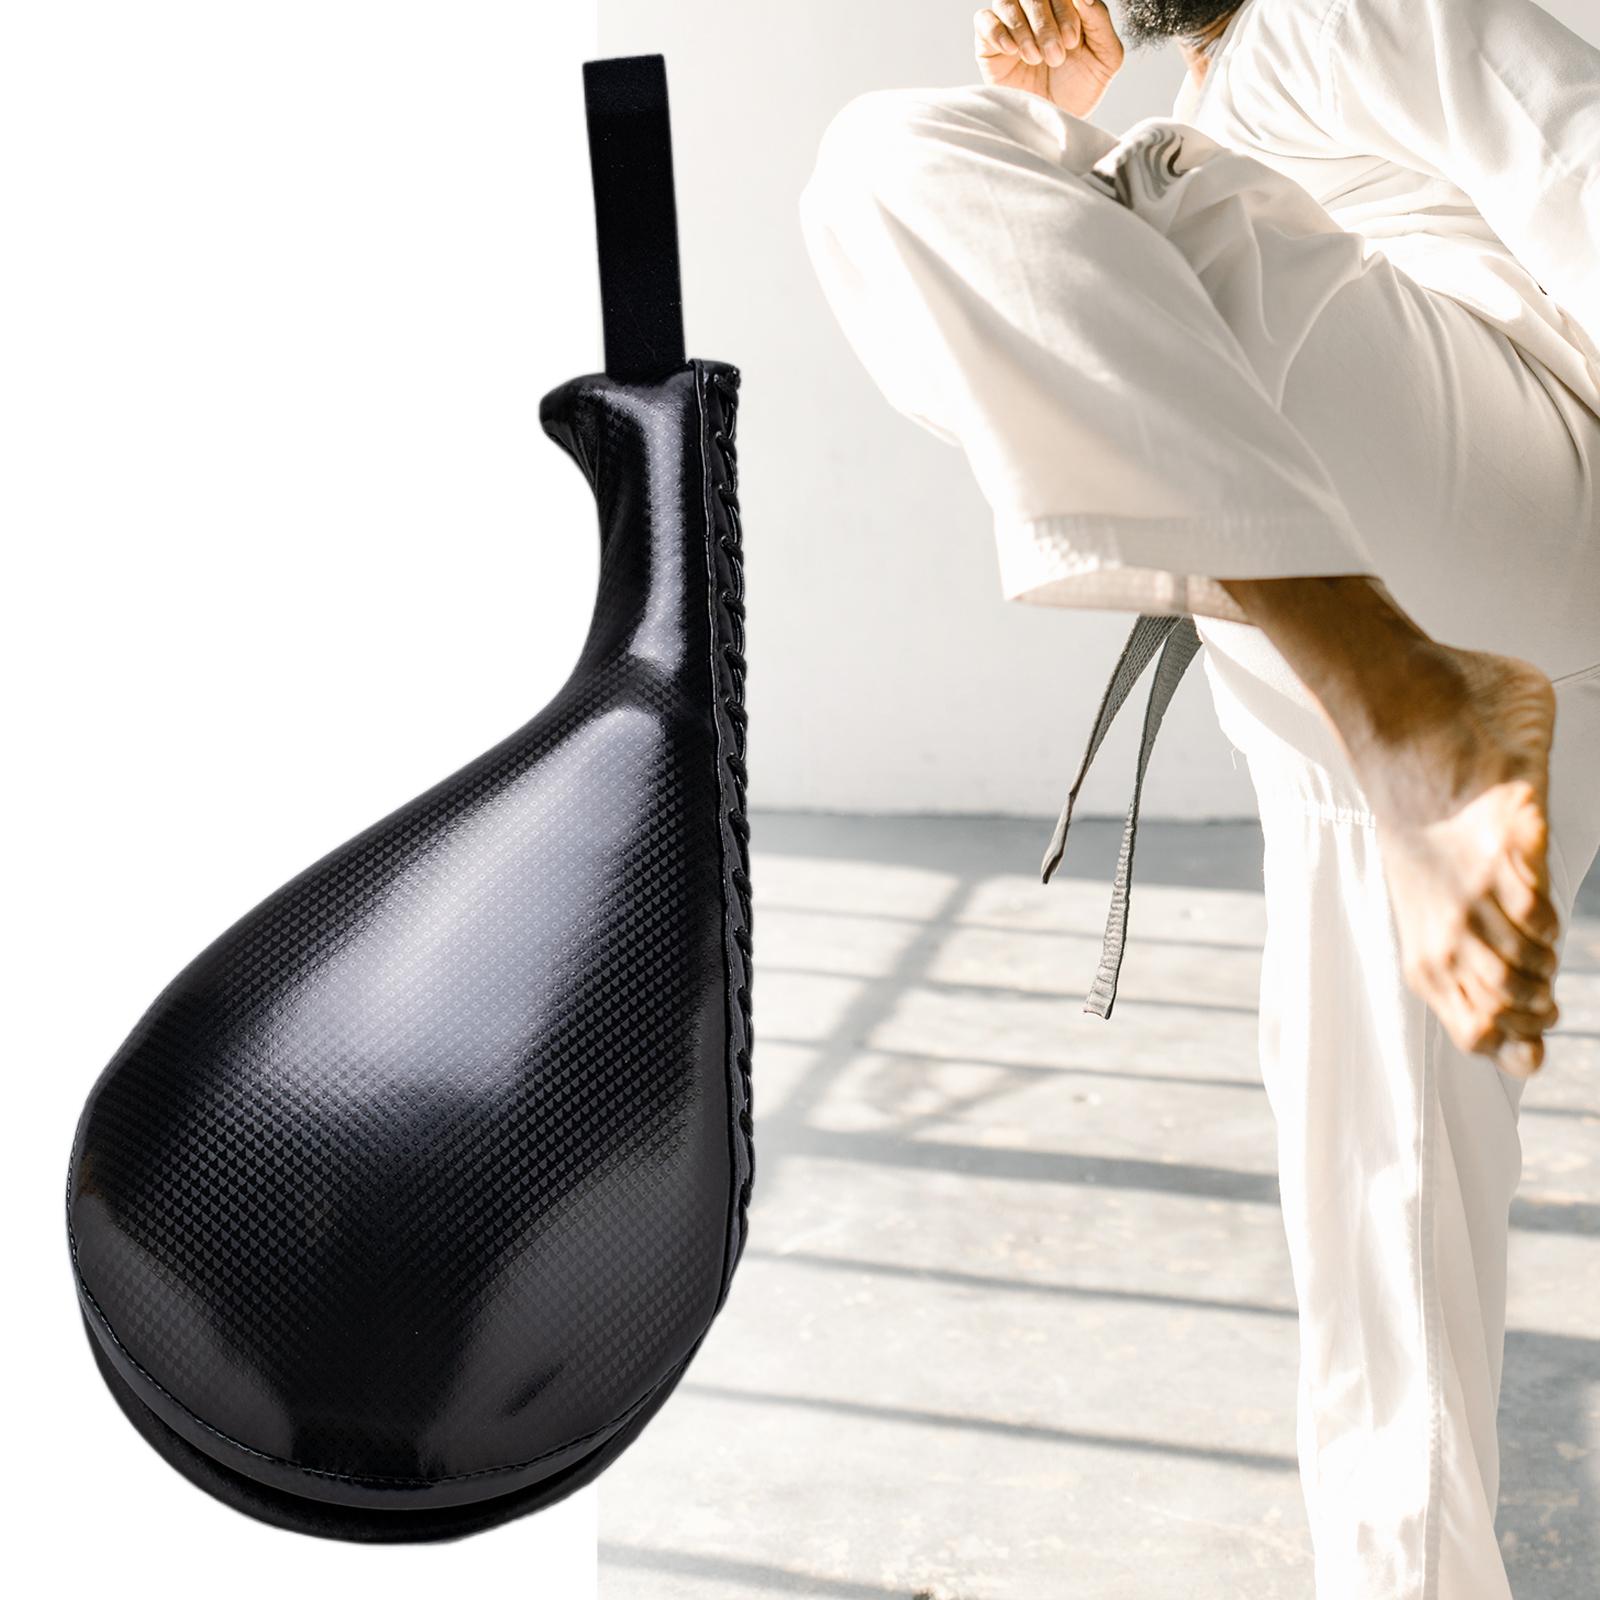 Taekwondo Kick Pads Kickboxing Training Kicking Shield Kicking Target Pad Black 38x20cm